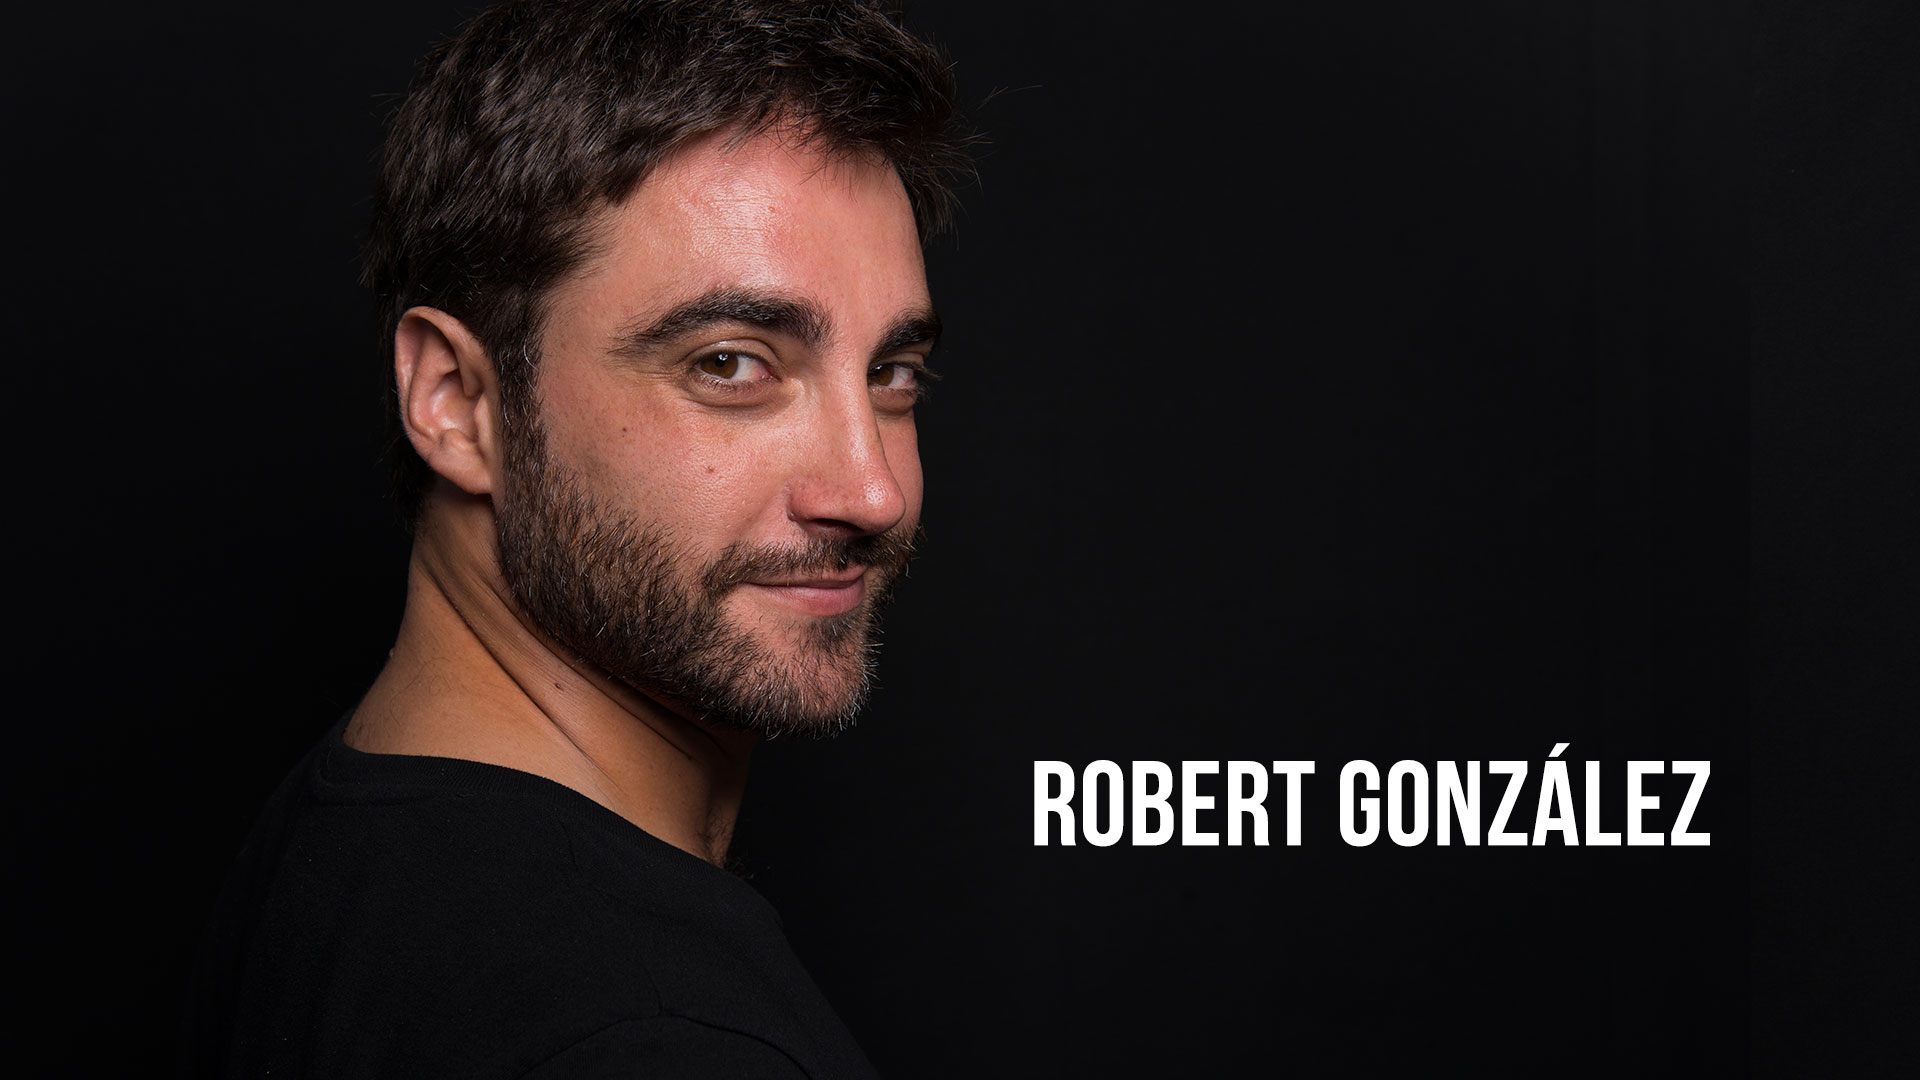 Robert González - Videobook Actor